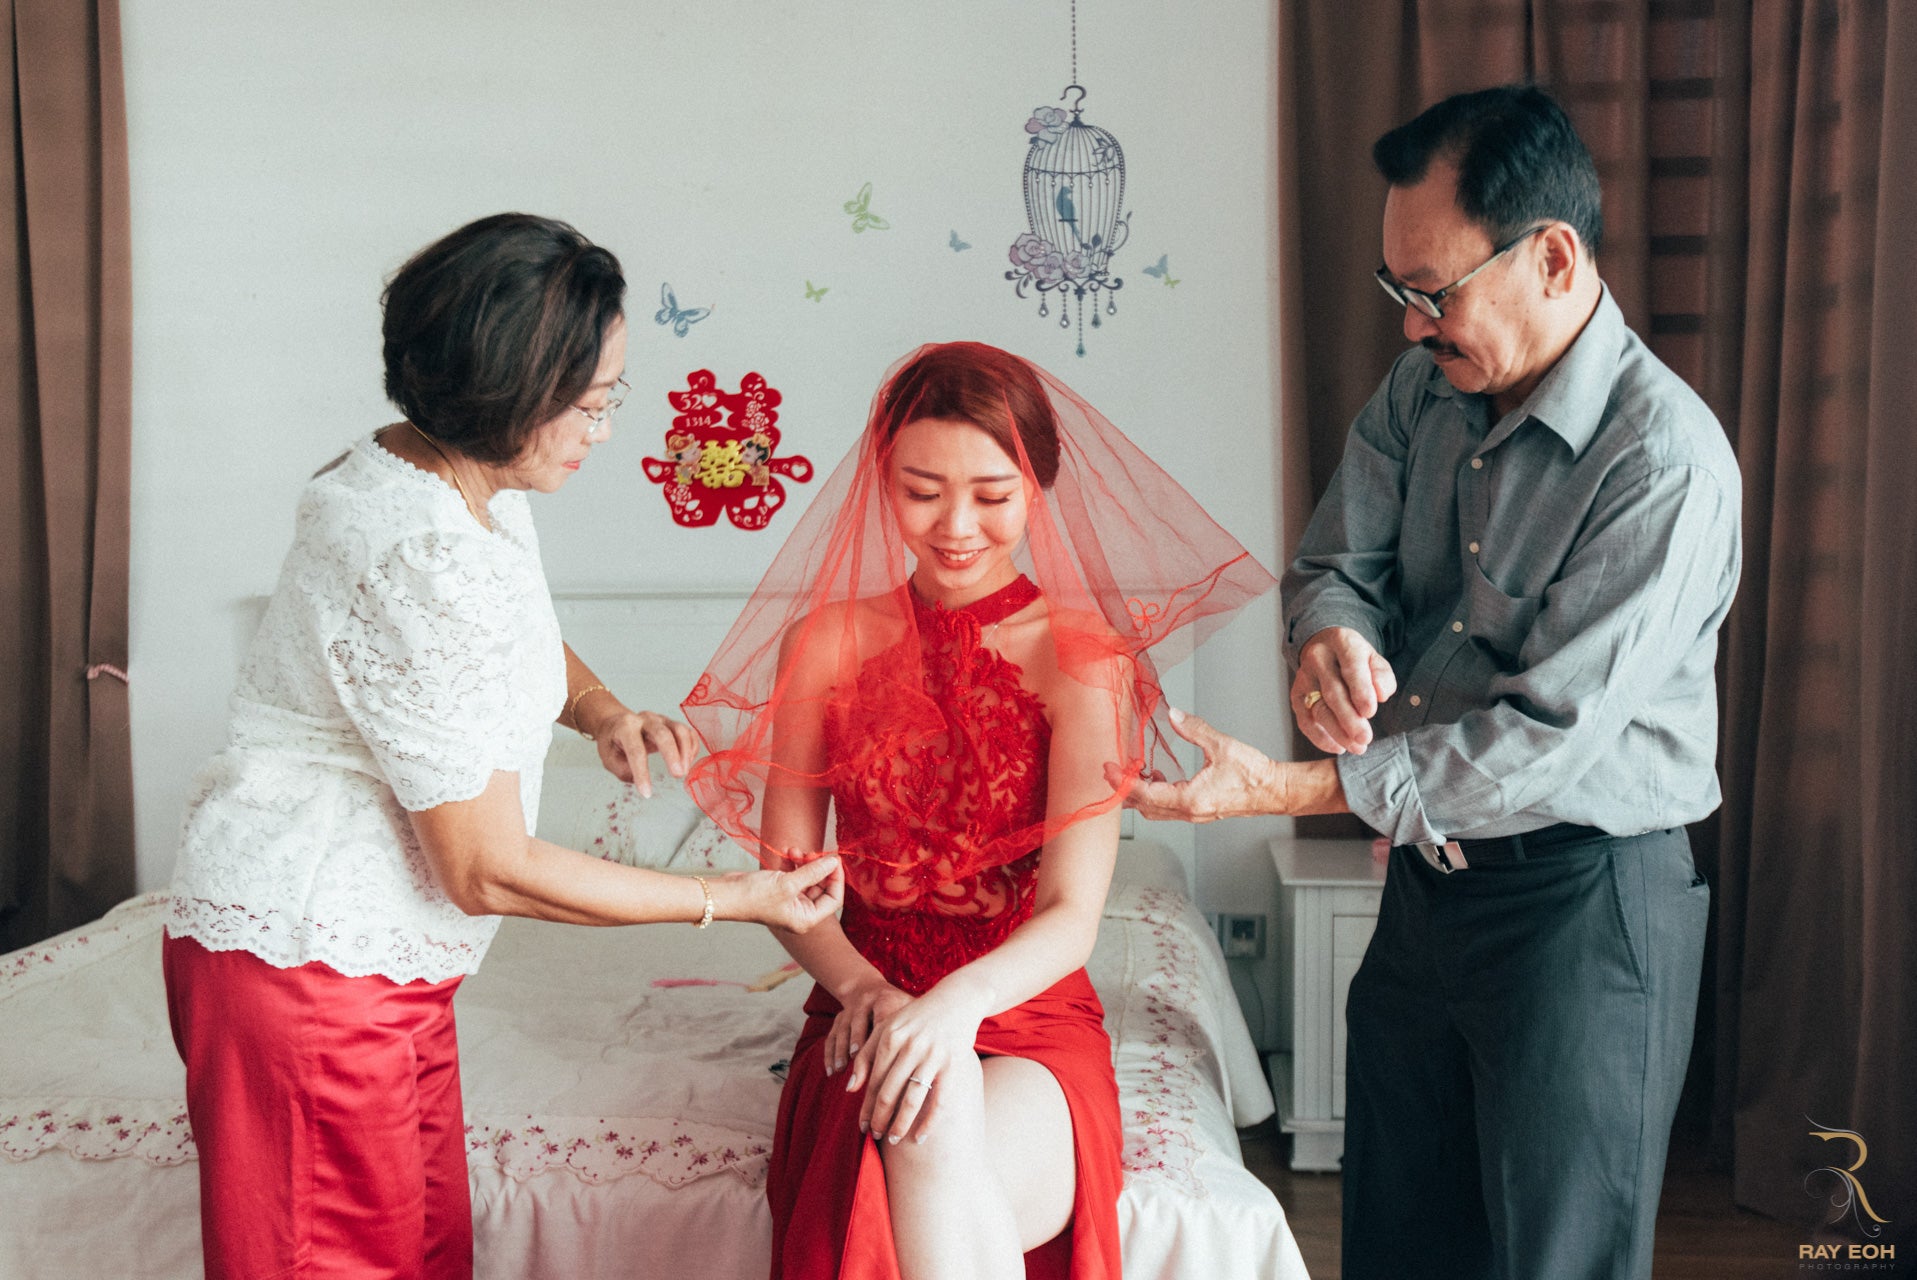 Wedding Day: Alex & Sui Ling